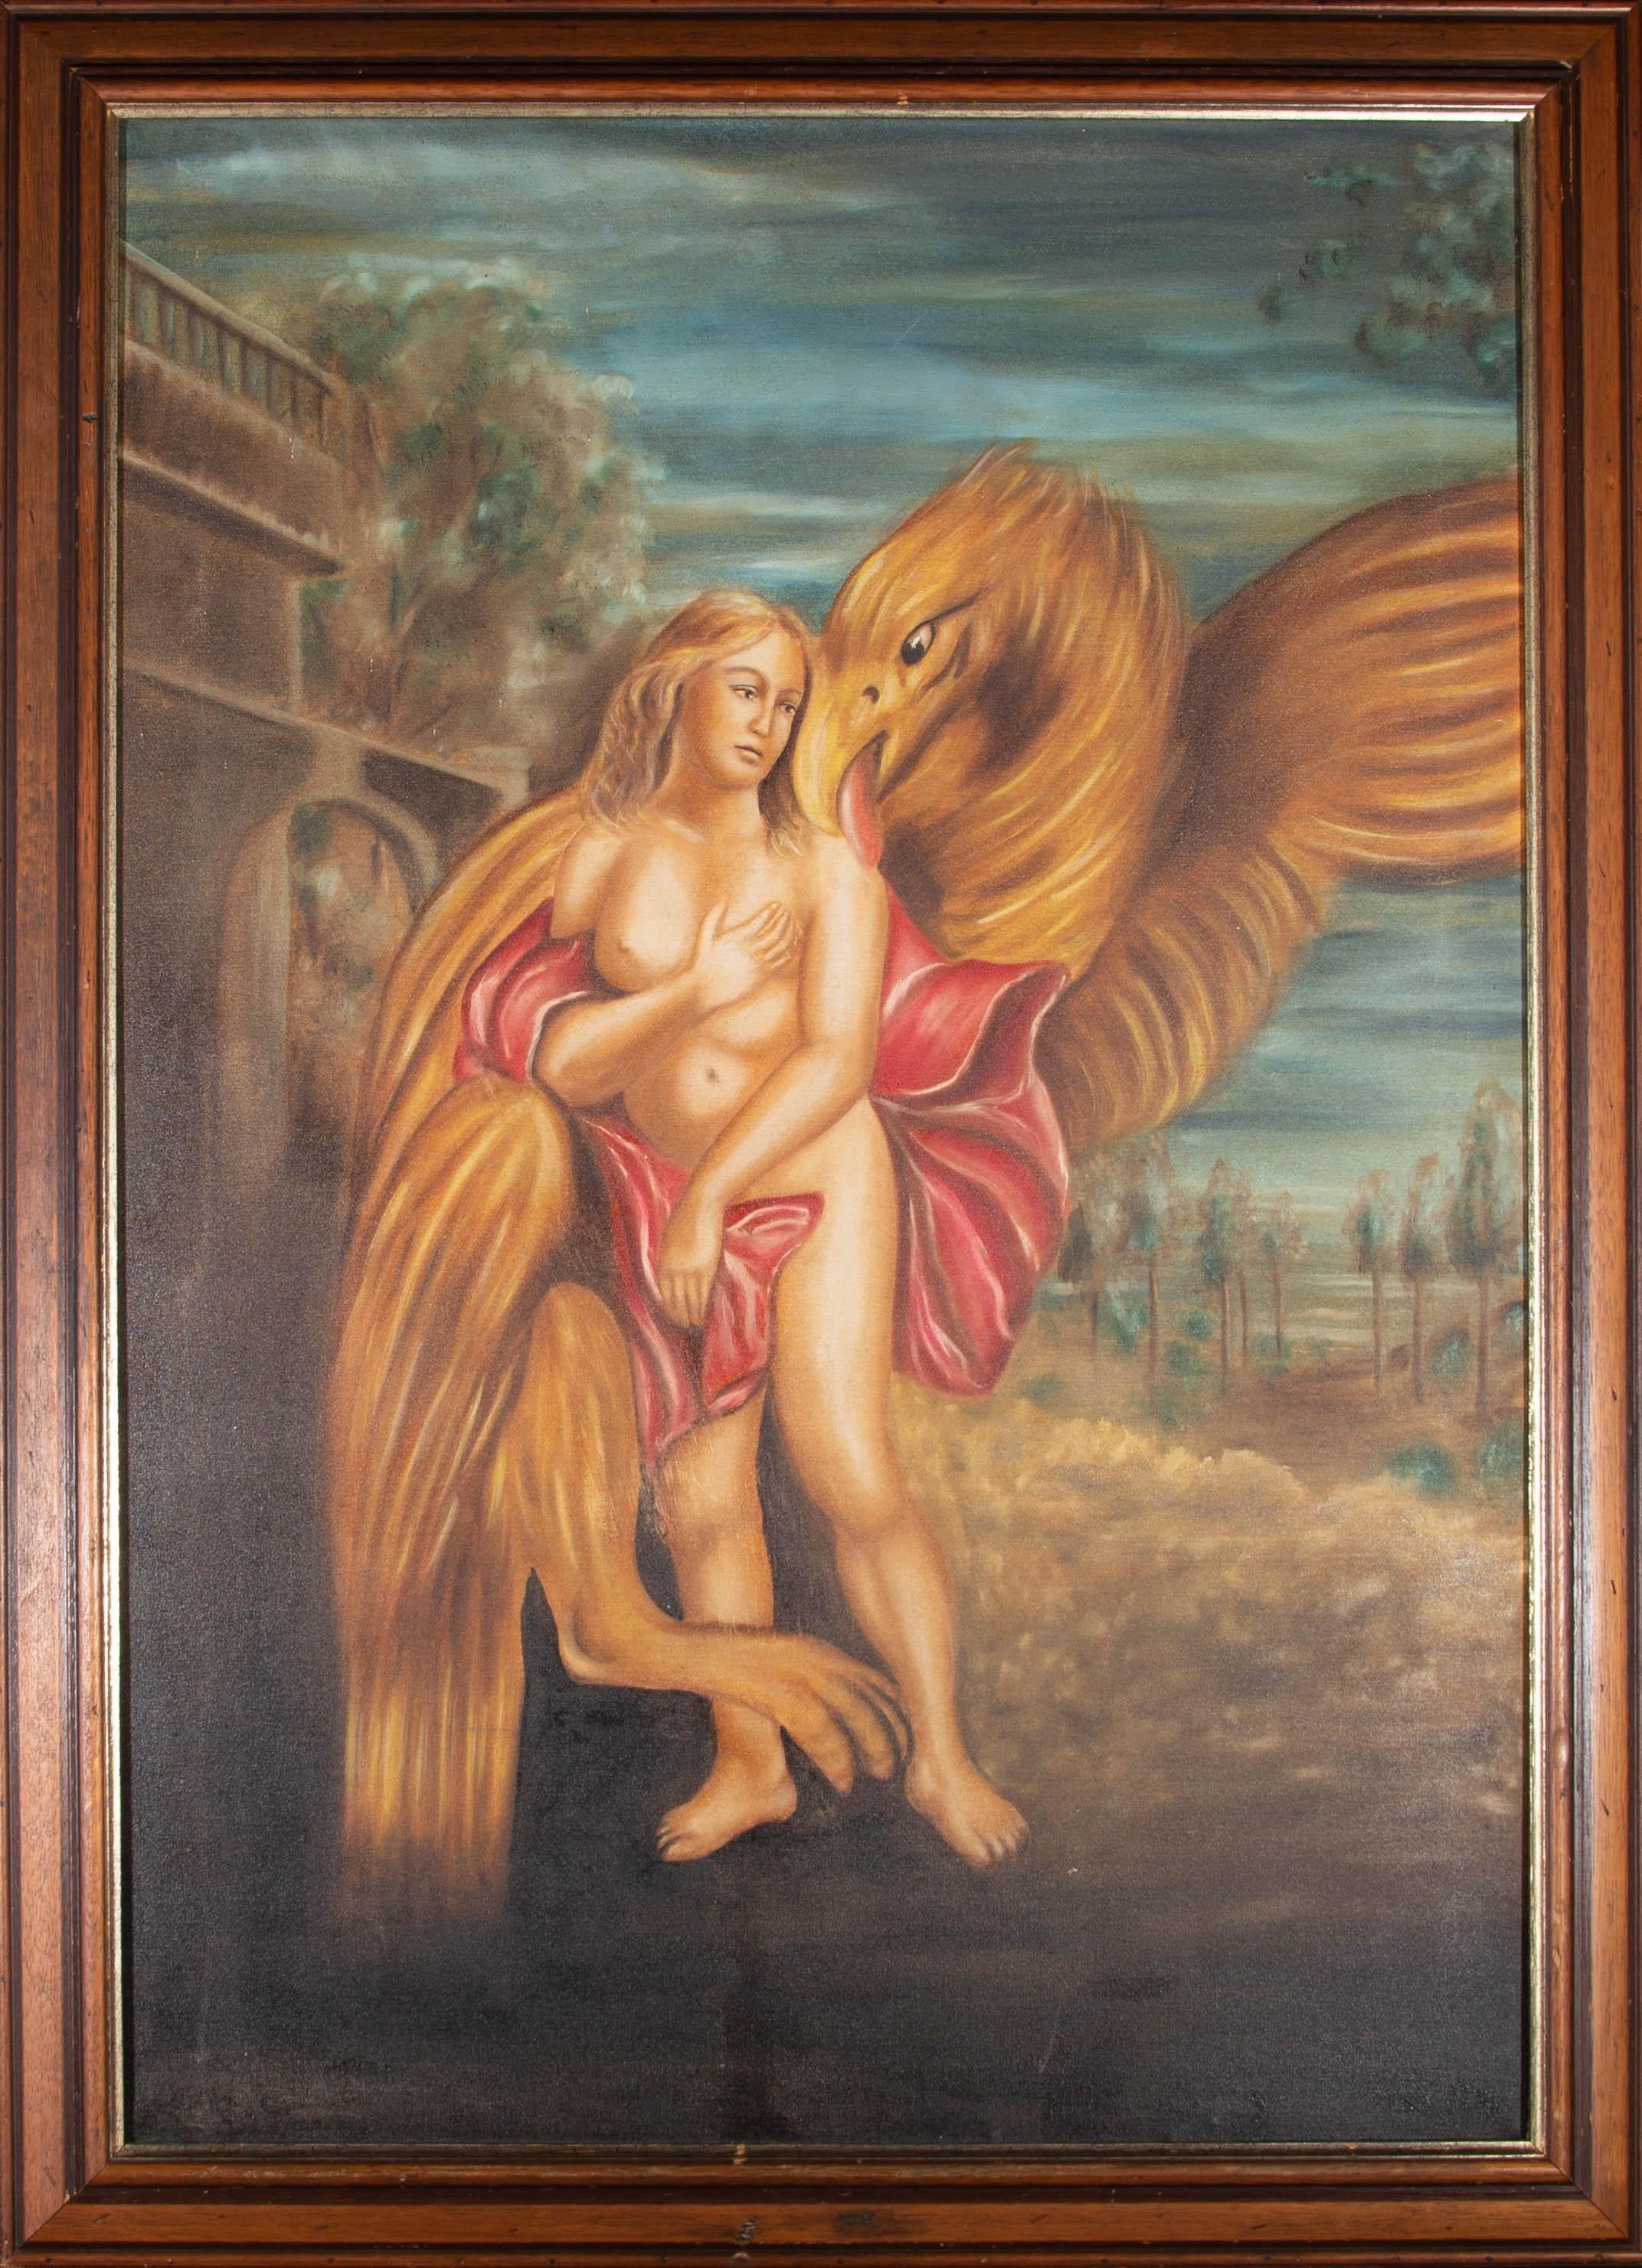 Unknown Nude Painting – Ölgemälde des 20. Jahrhunderts - Die Umarmung des Griffins